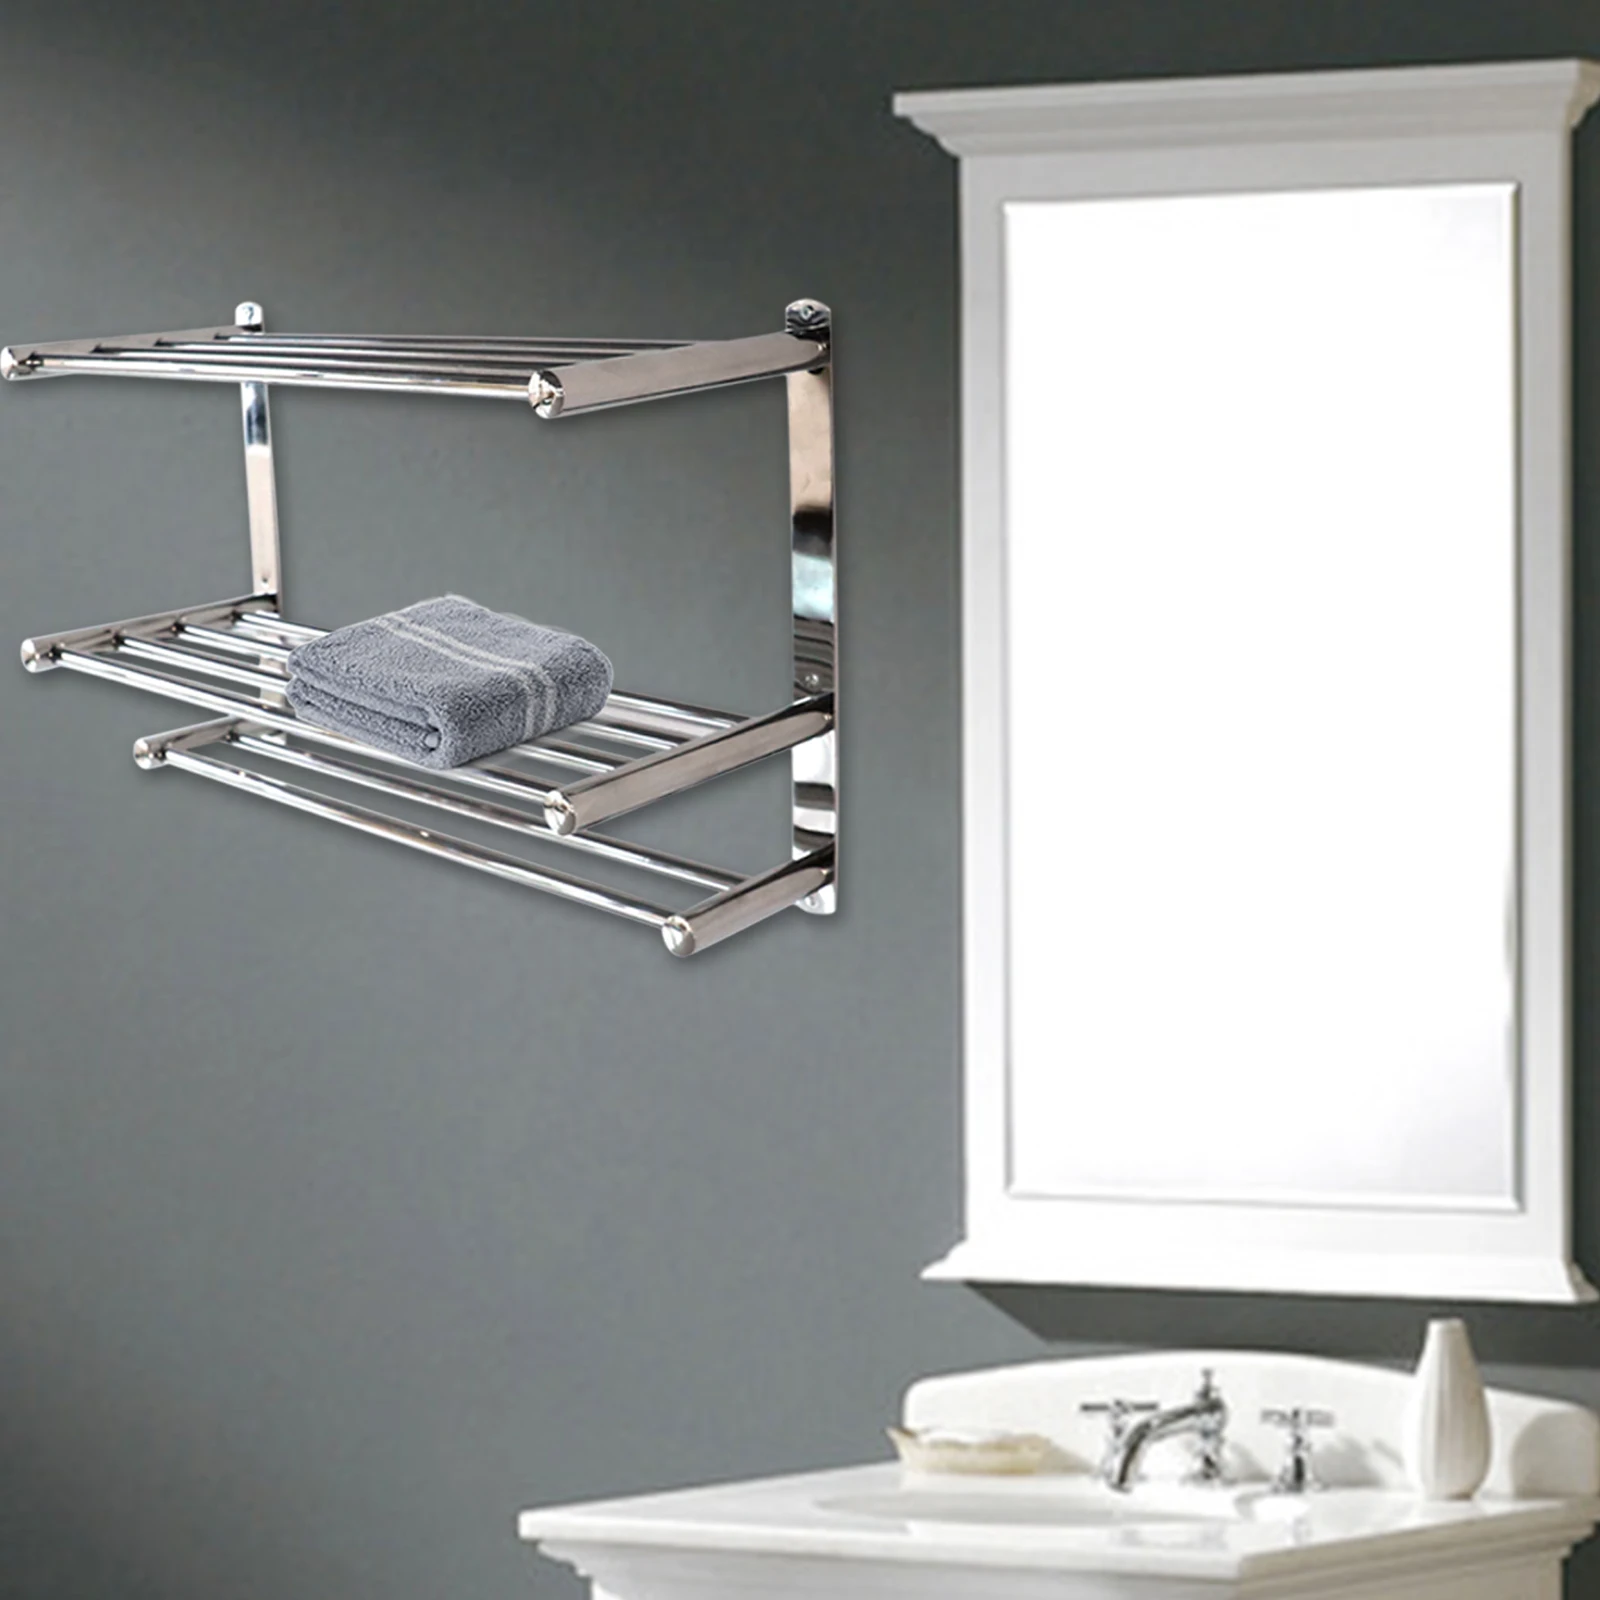 

24-Inch 3 Tier Bath Towel Bar Multilayer Rack Stainless Steel Wall-Mounted Shelf Bathroom Shelf With Towel Bars